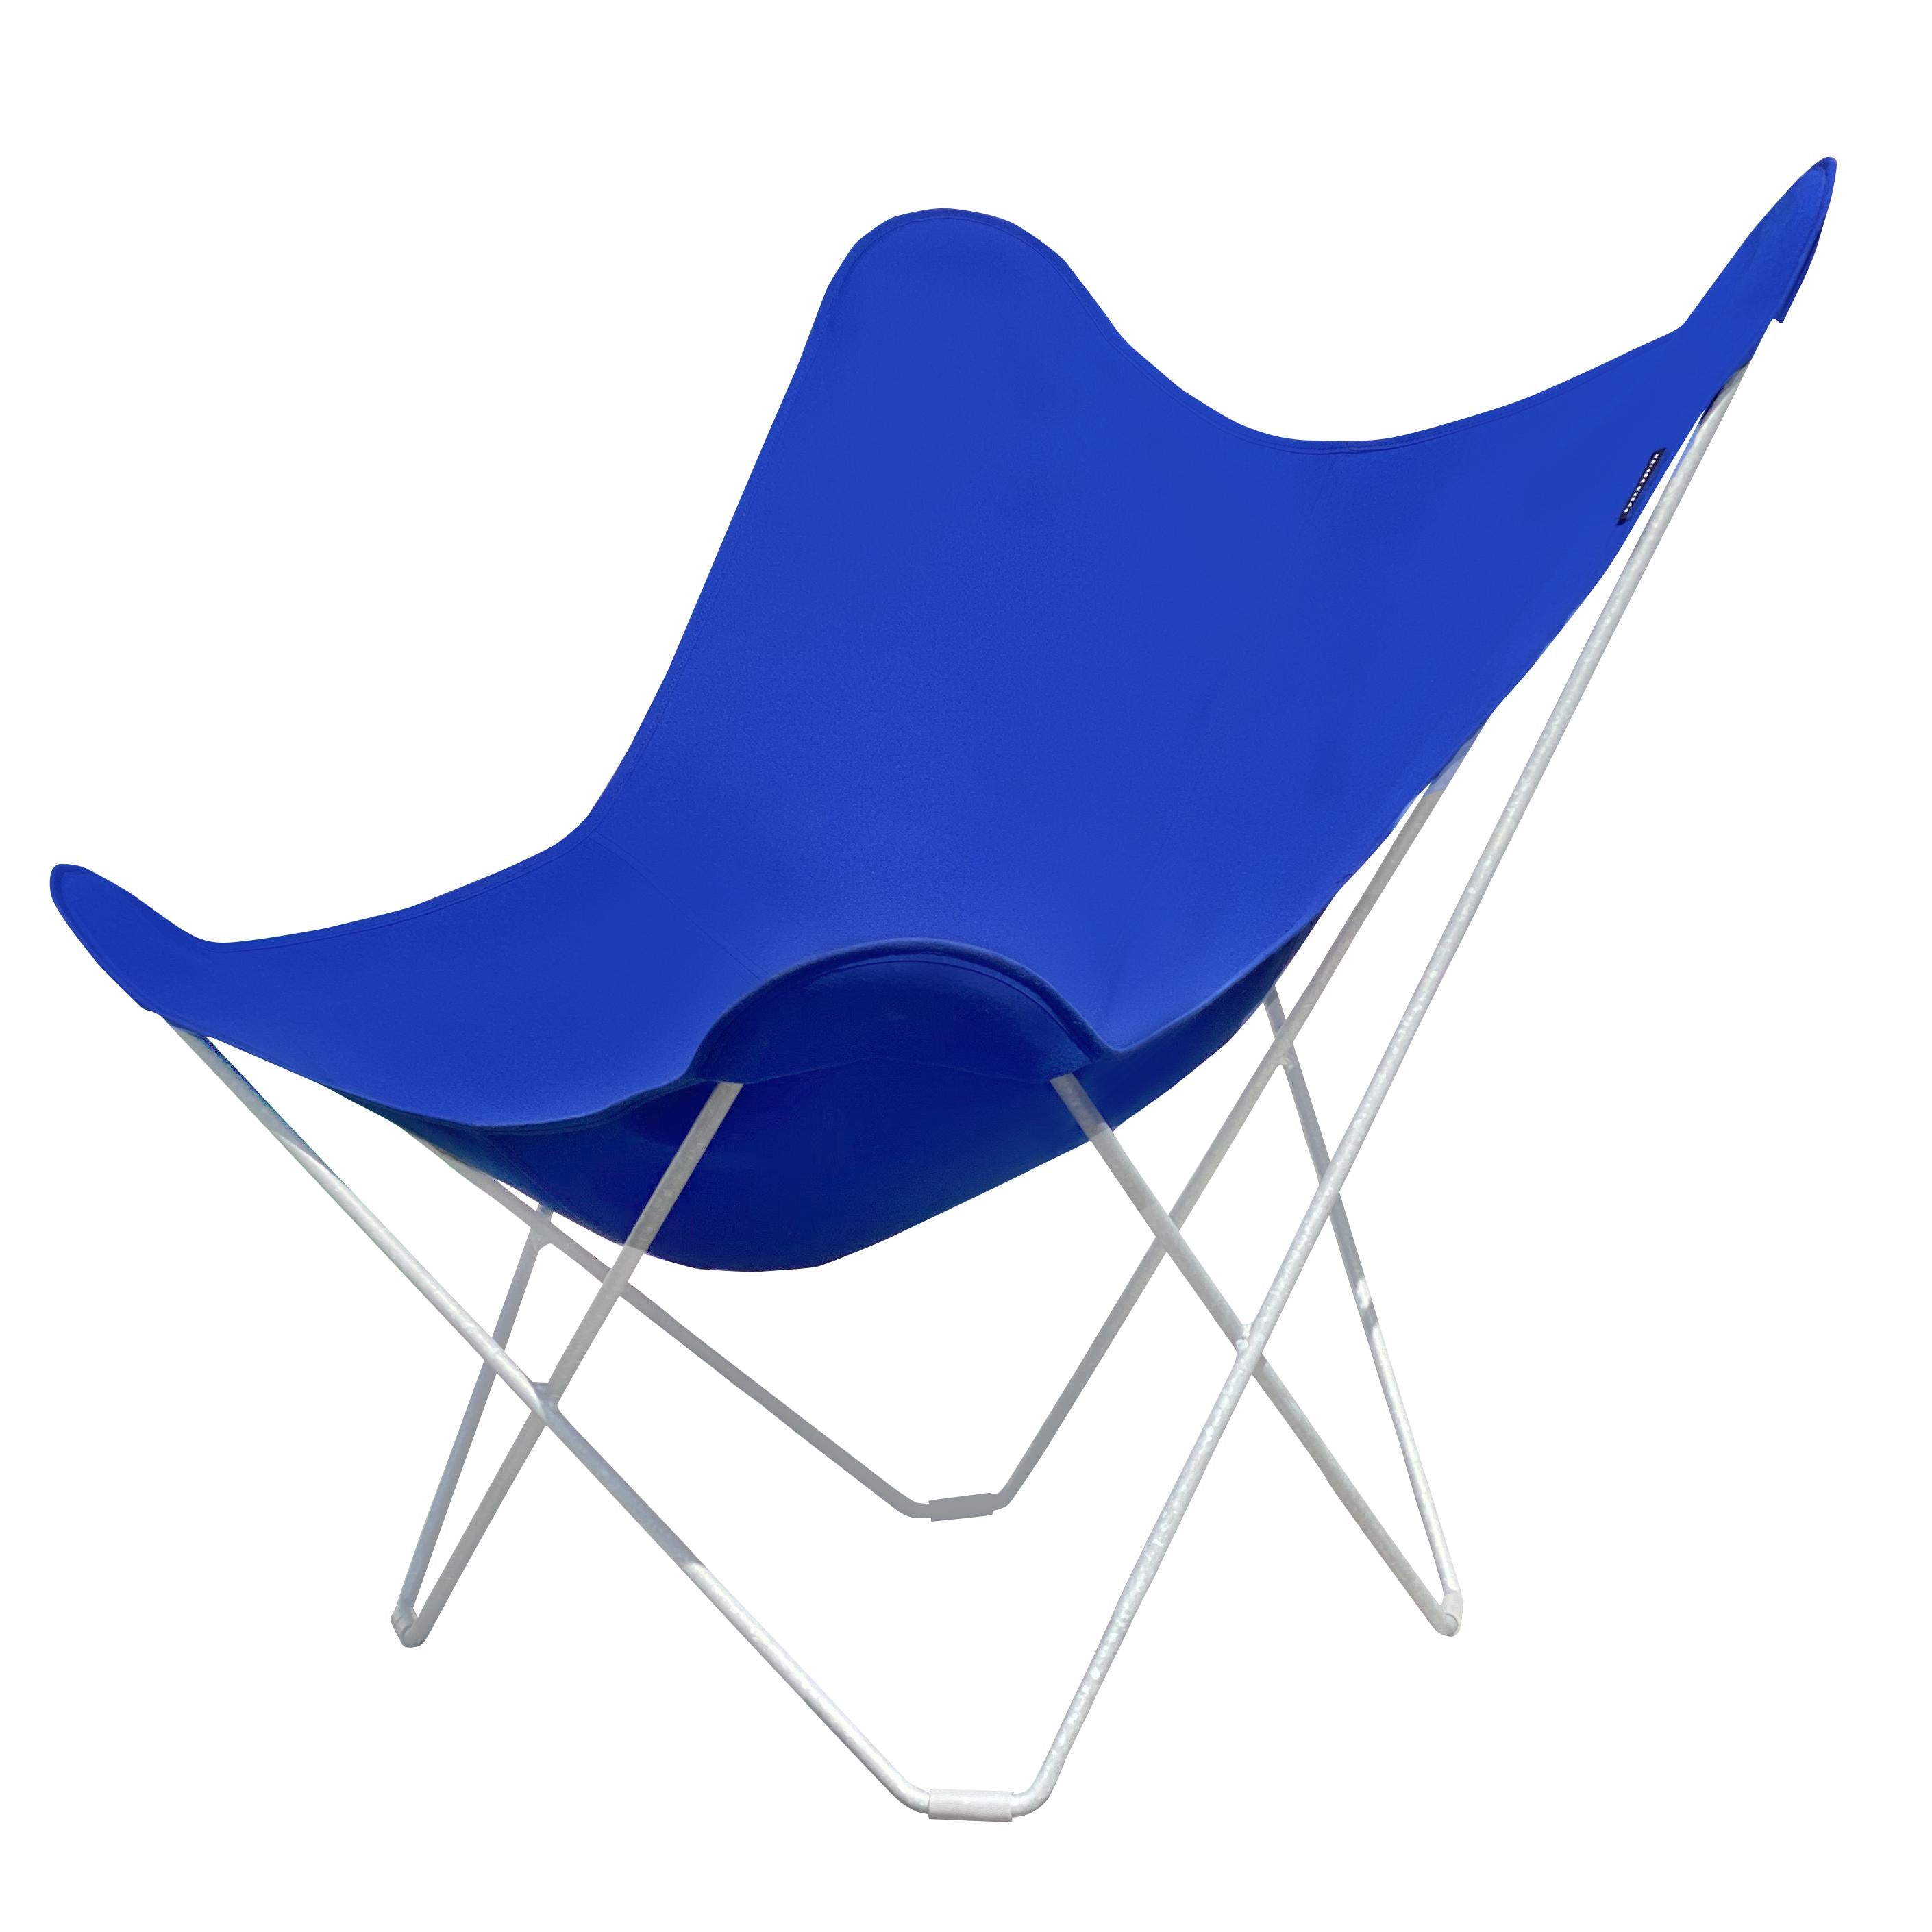 Cuero Sunshine Mariposa Butterfly Chair, Galvanisé Bleu Atlantique/Noir